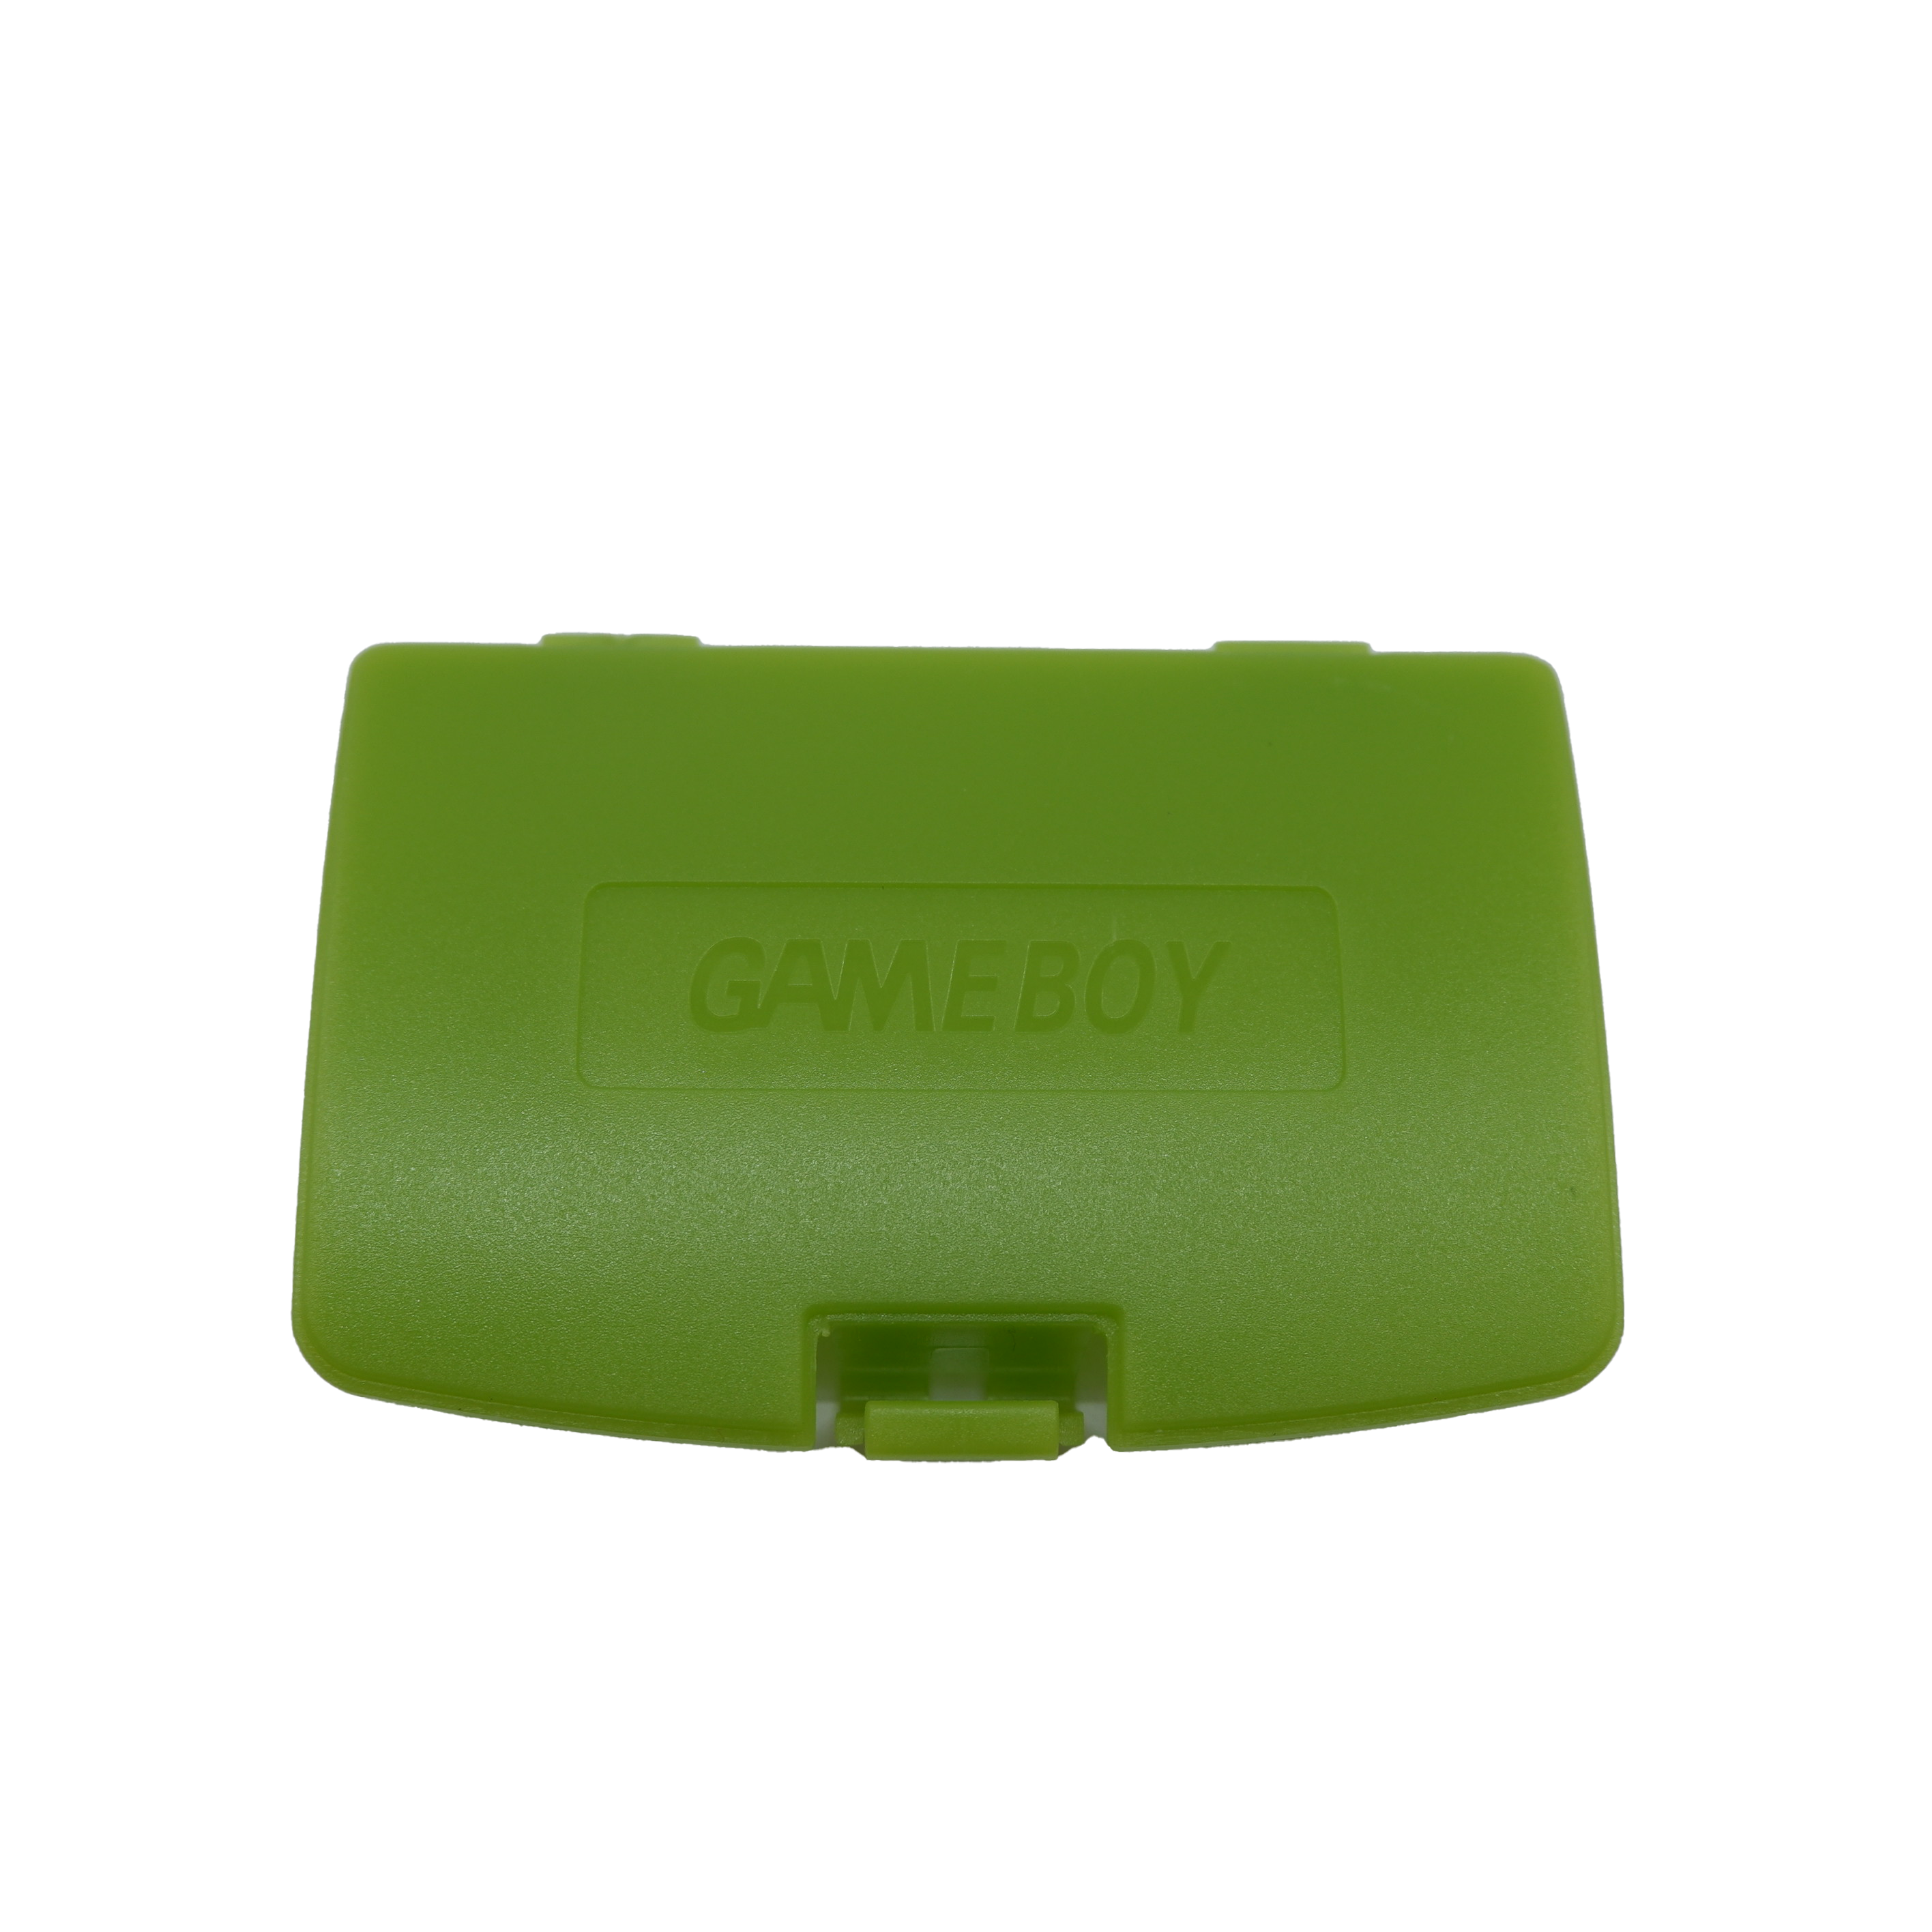 Game boy color GBC battery door cover AUS Australia